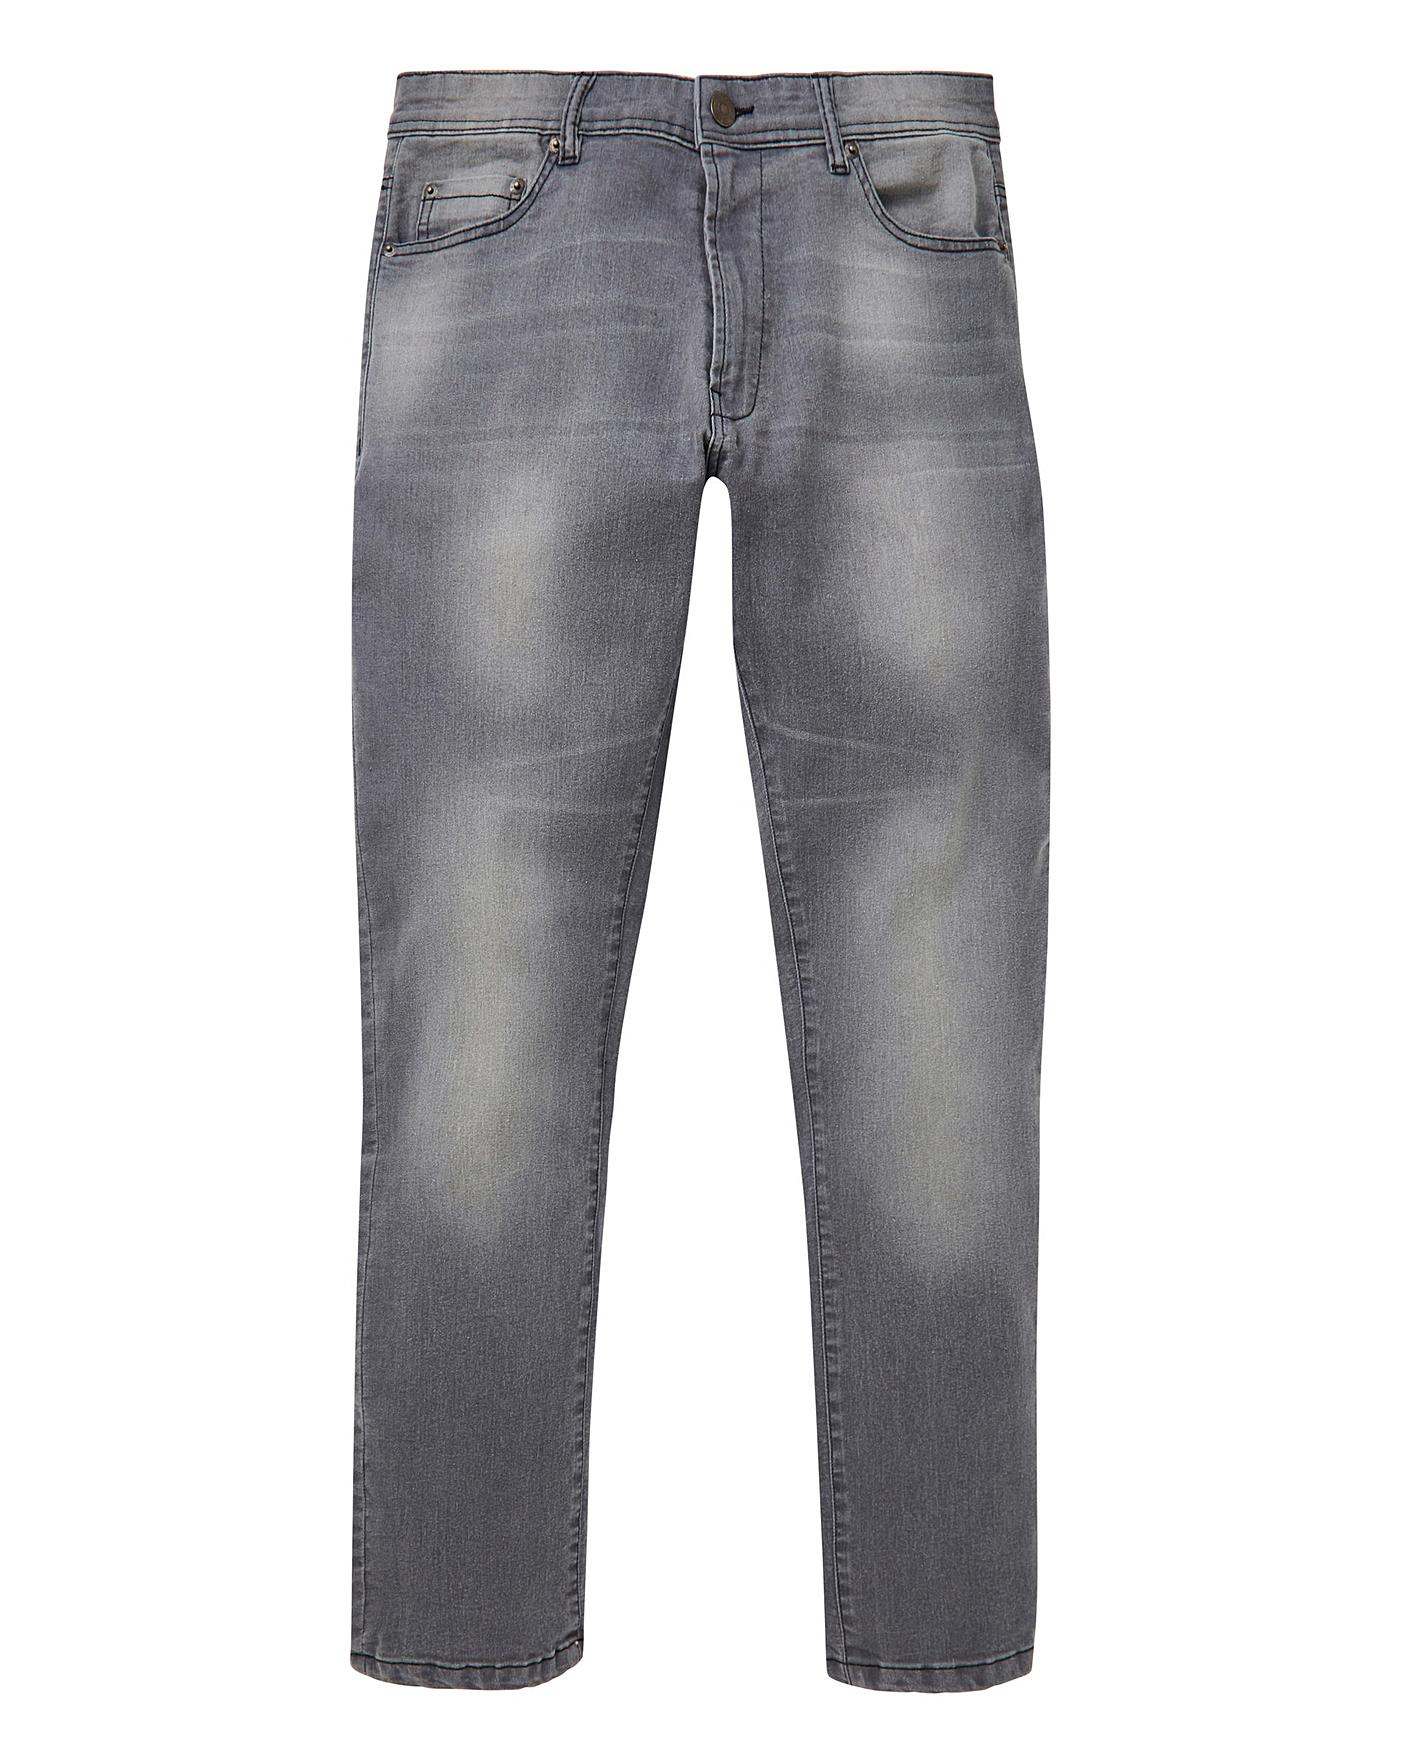 smart grey jeans